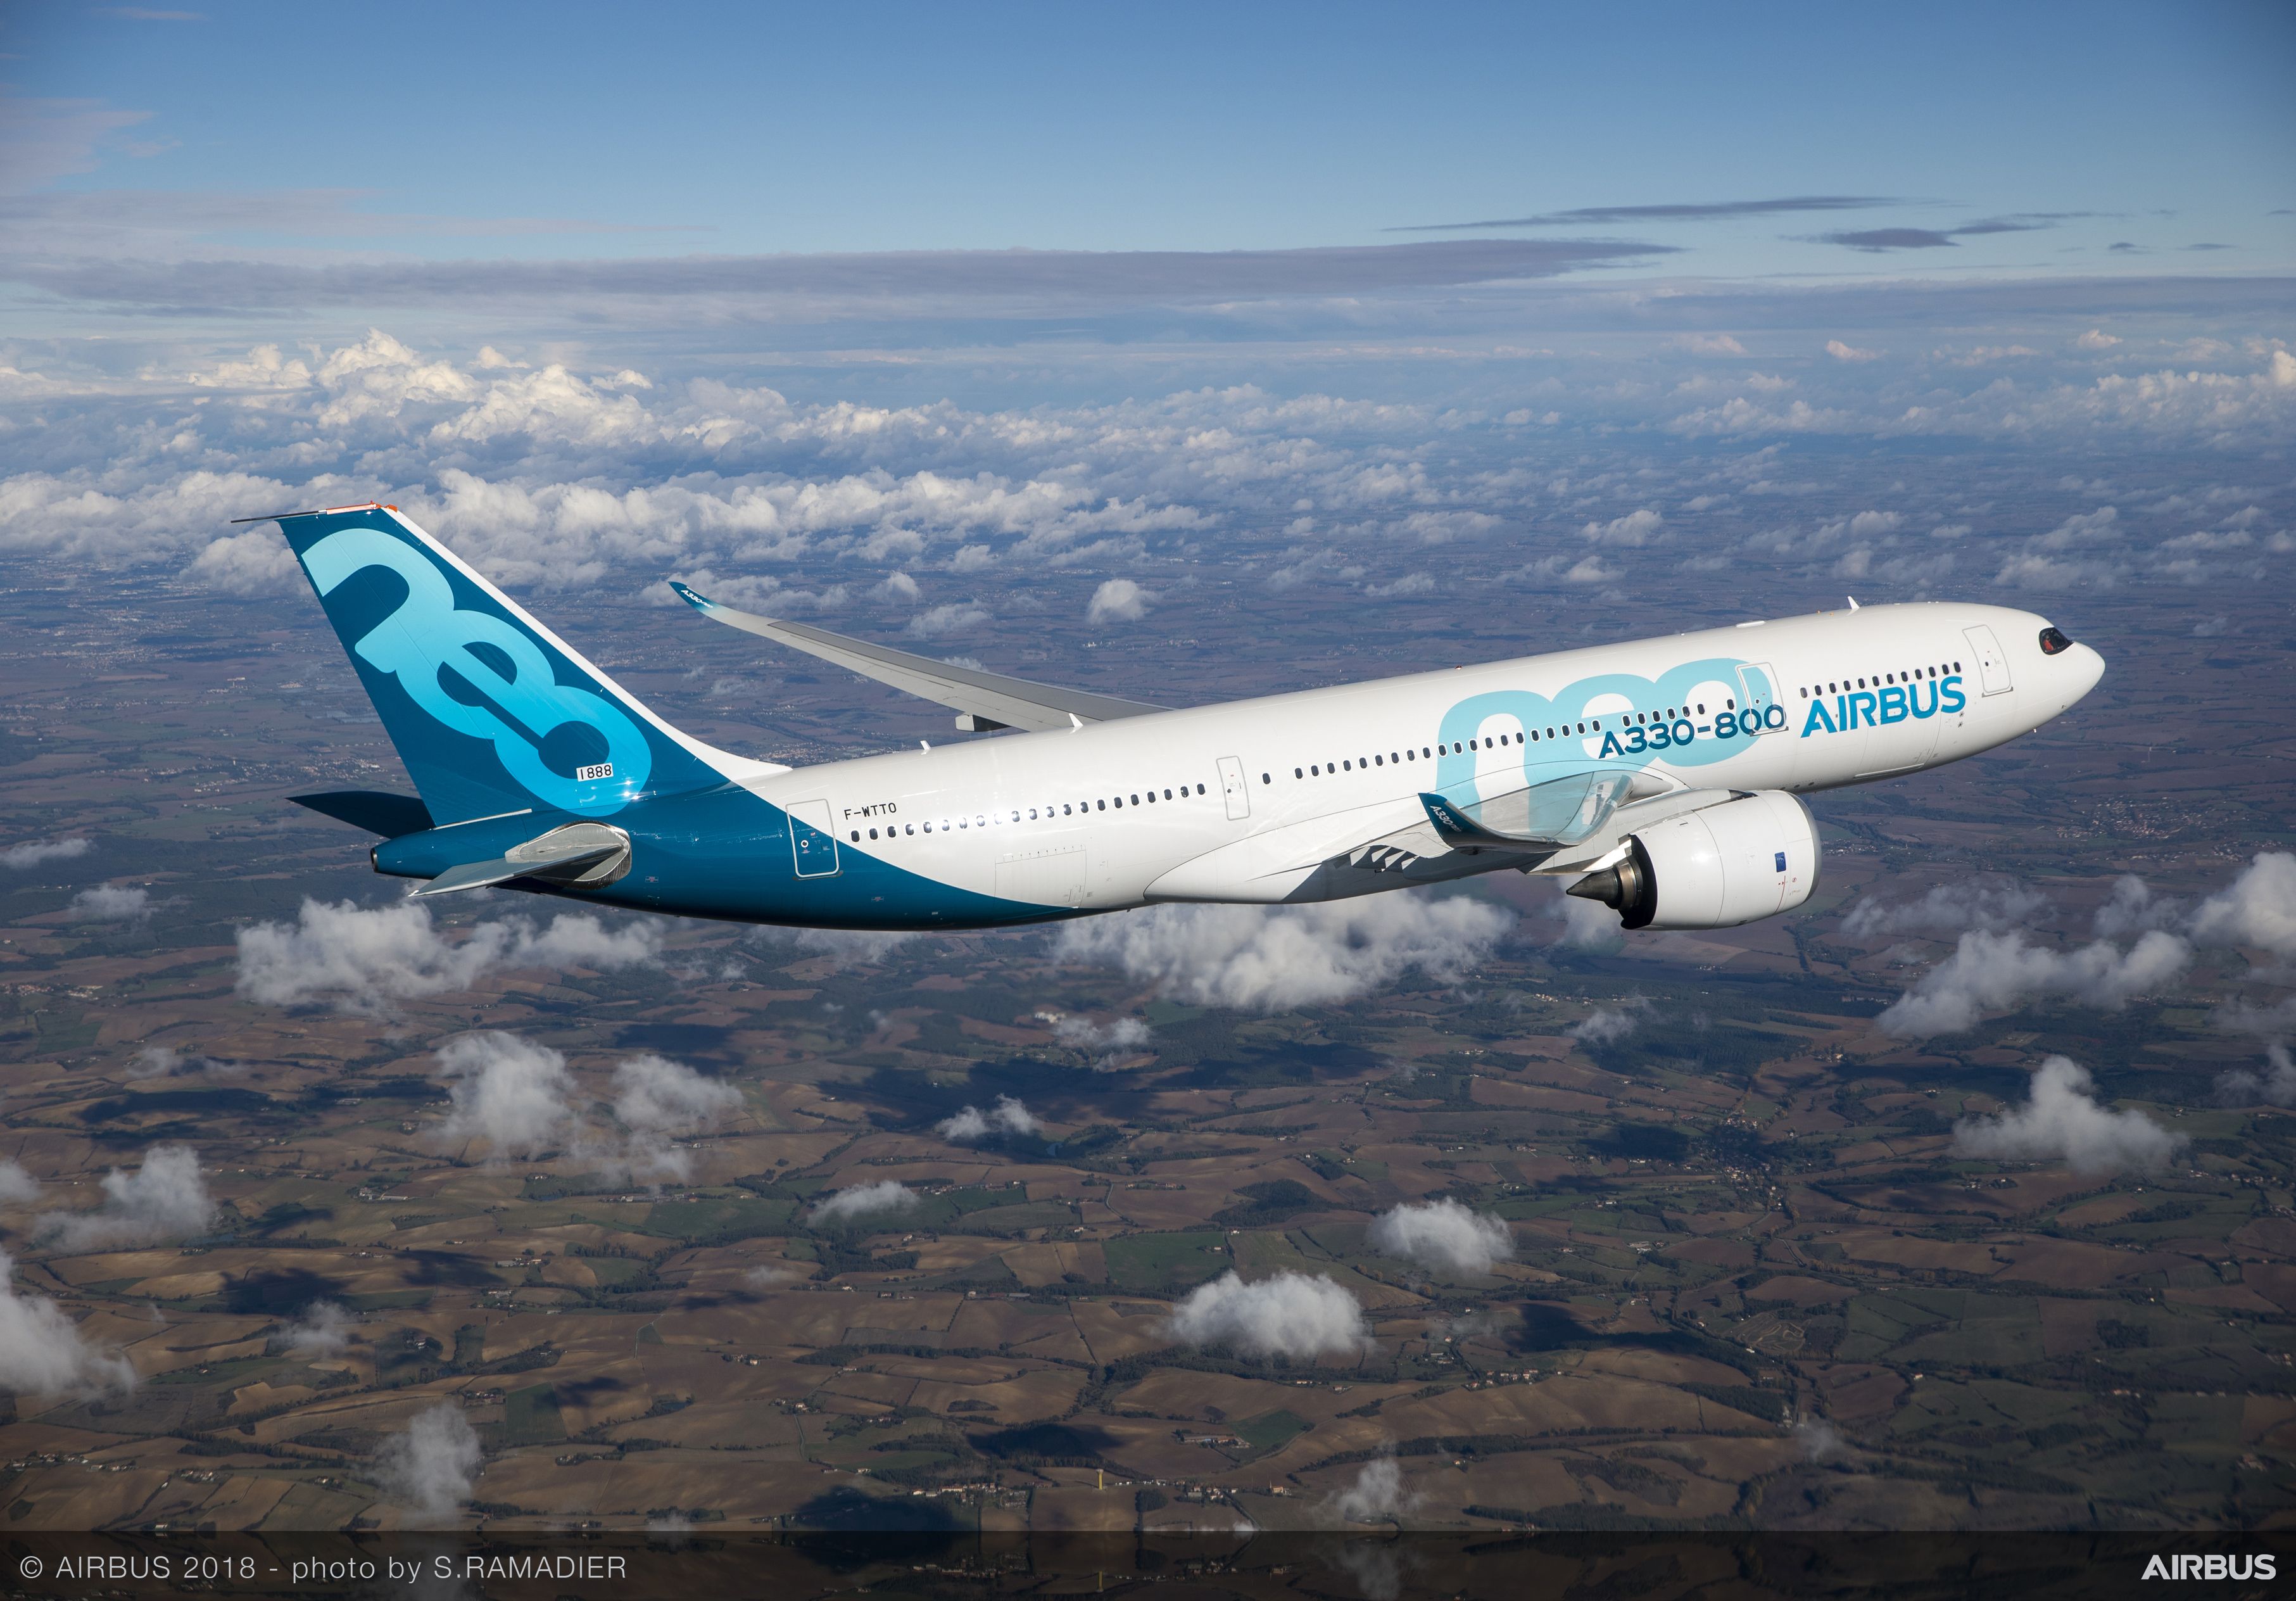 Airbus A330-800 2020 İkinci Yarısında Hazır Olacak